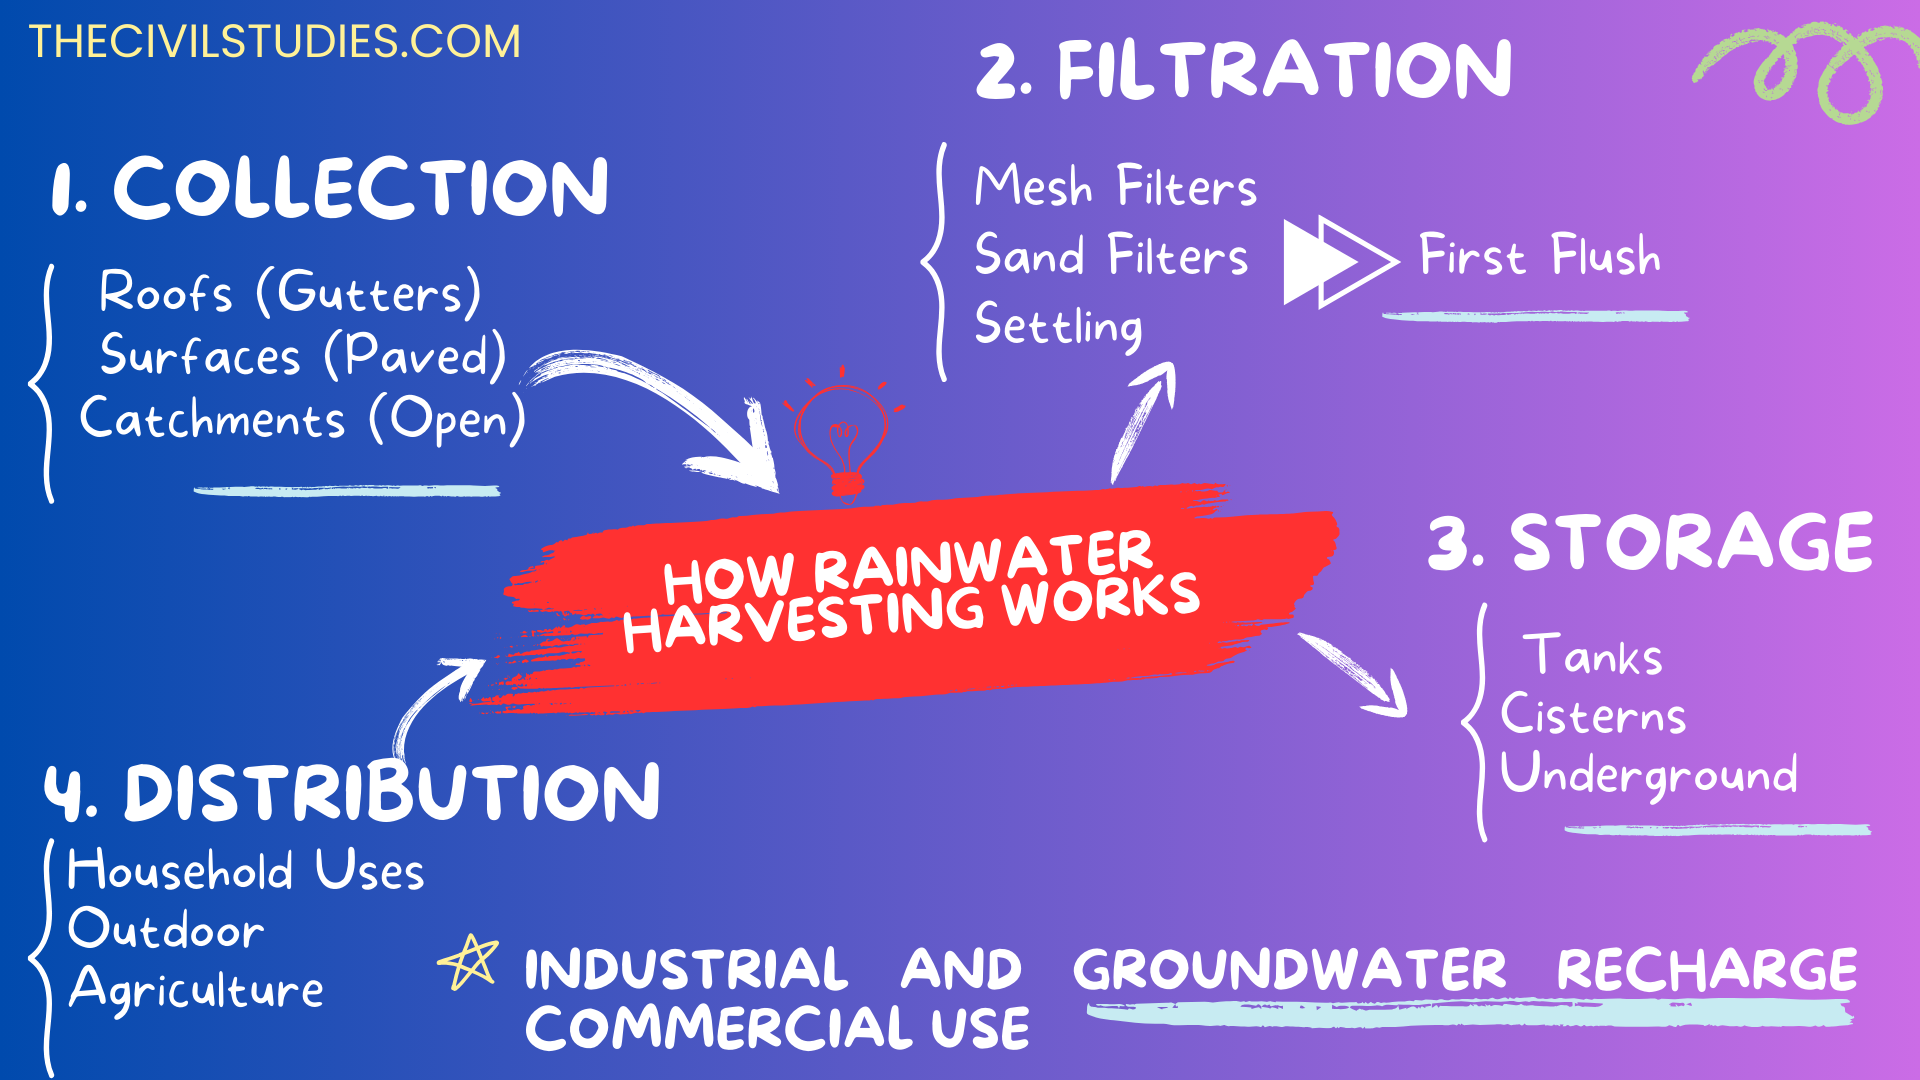 Rain water harvesting HOW works